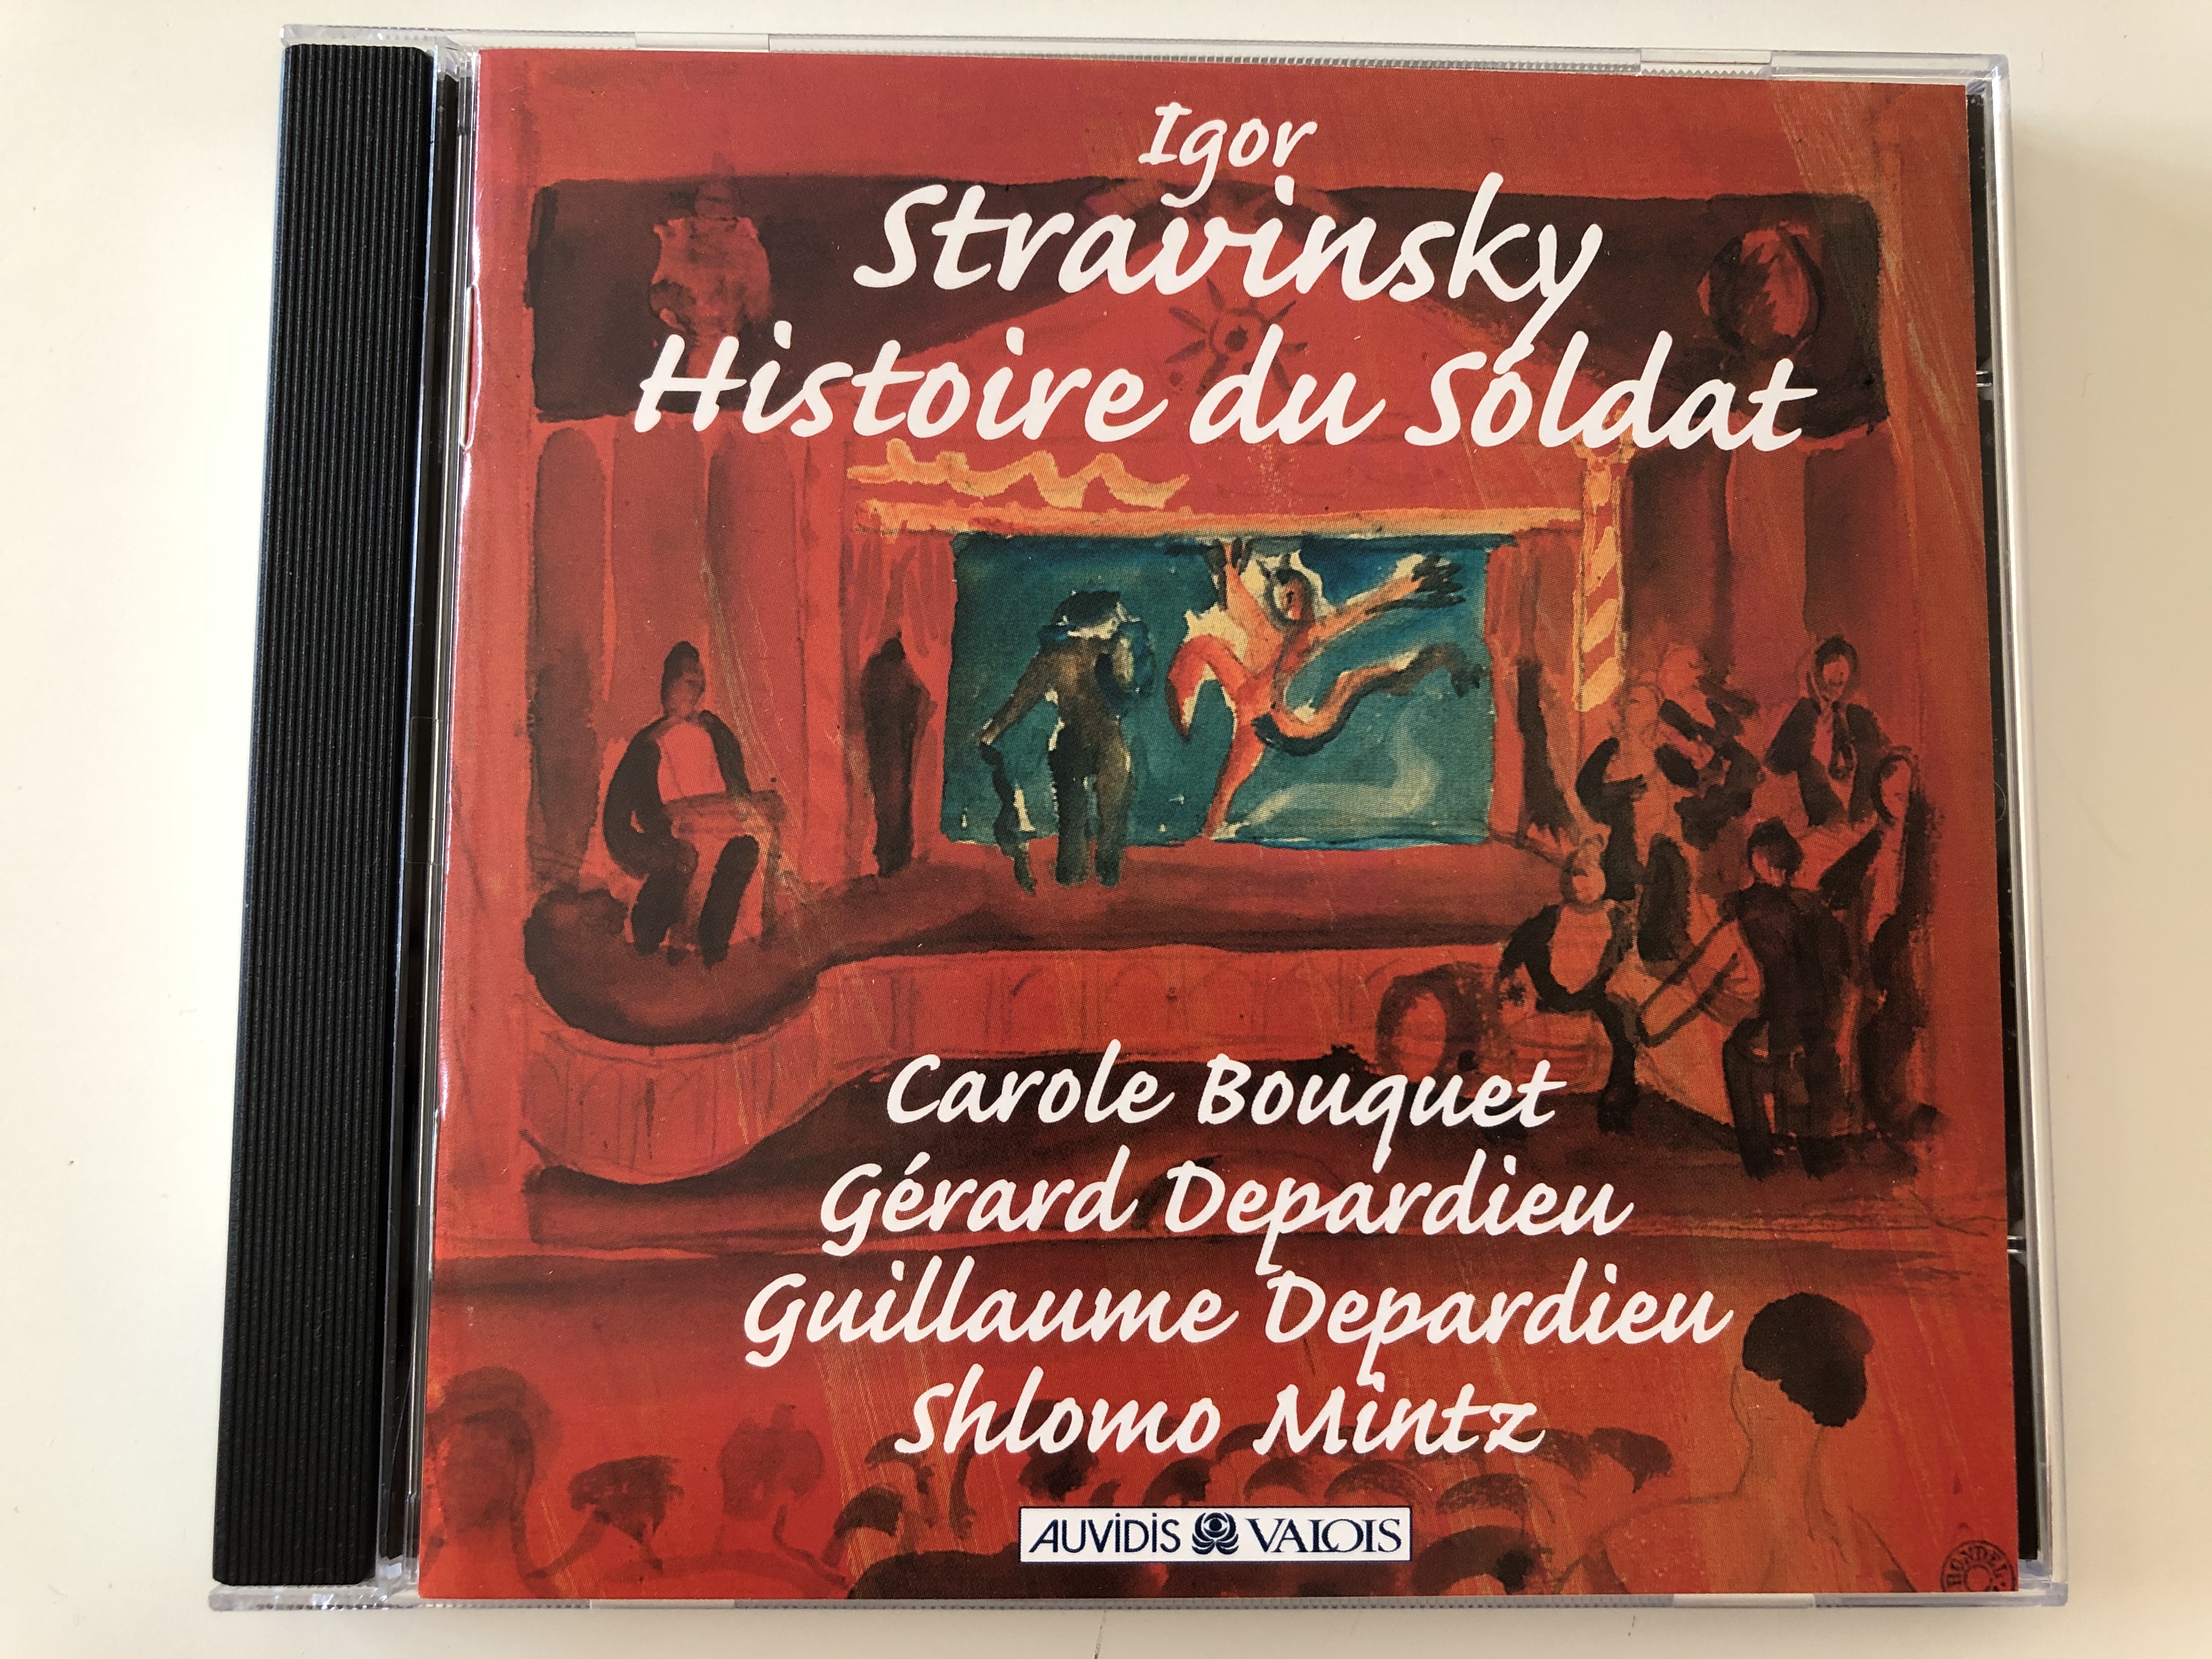 igor-stravinsky-histoire-du-soldat-carole-bouquet-gerard-depardieu-guillaume-depardieu-sholmo-mintz-auvidis-france-audio-cd-1997-v-4805-1-.jpg